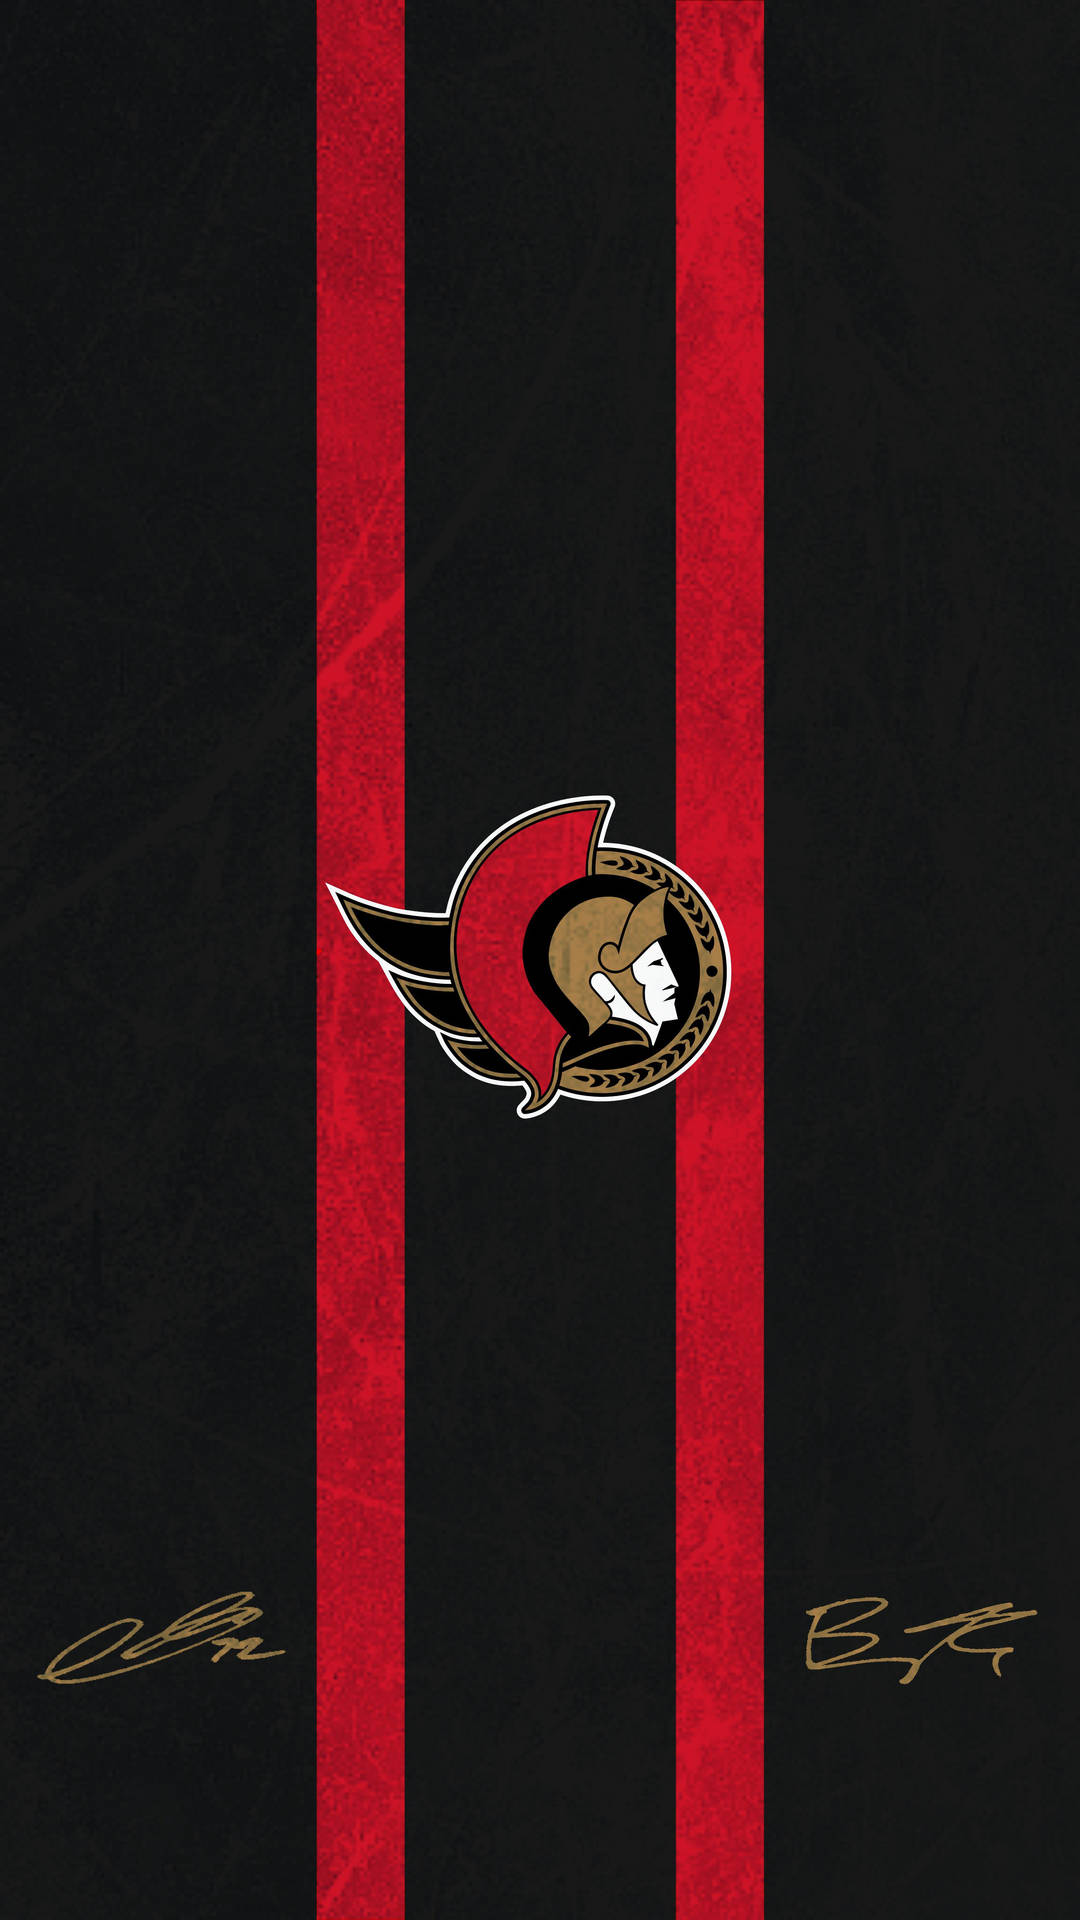 Ottawa Senators Logo With Signatures